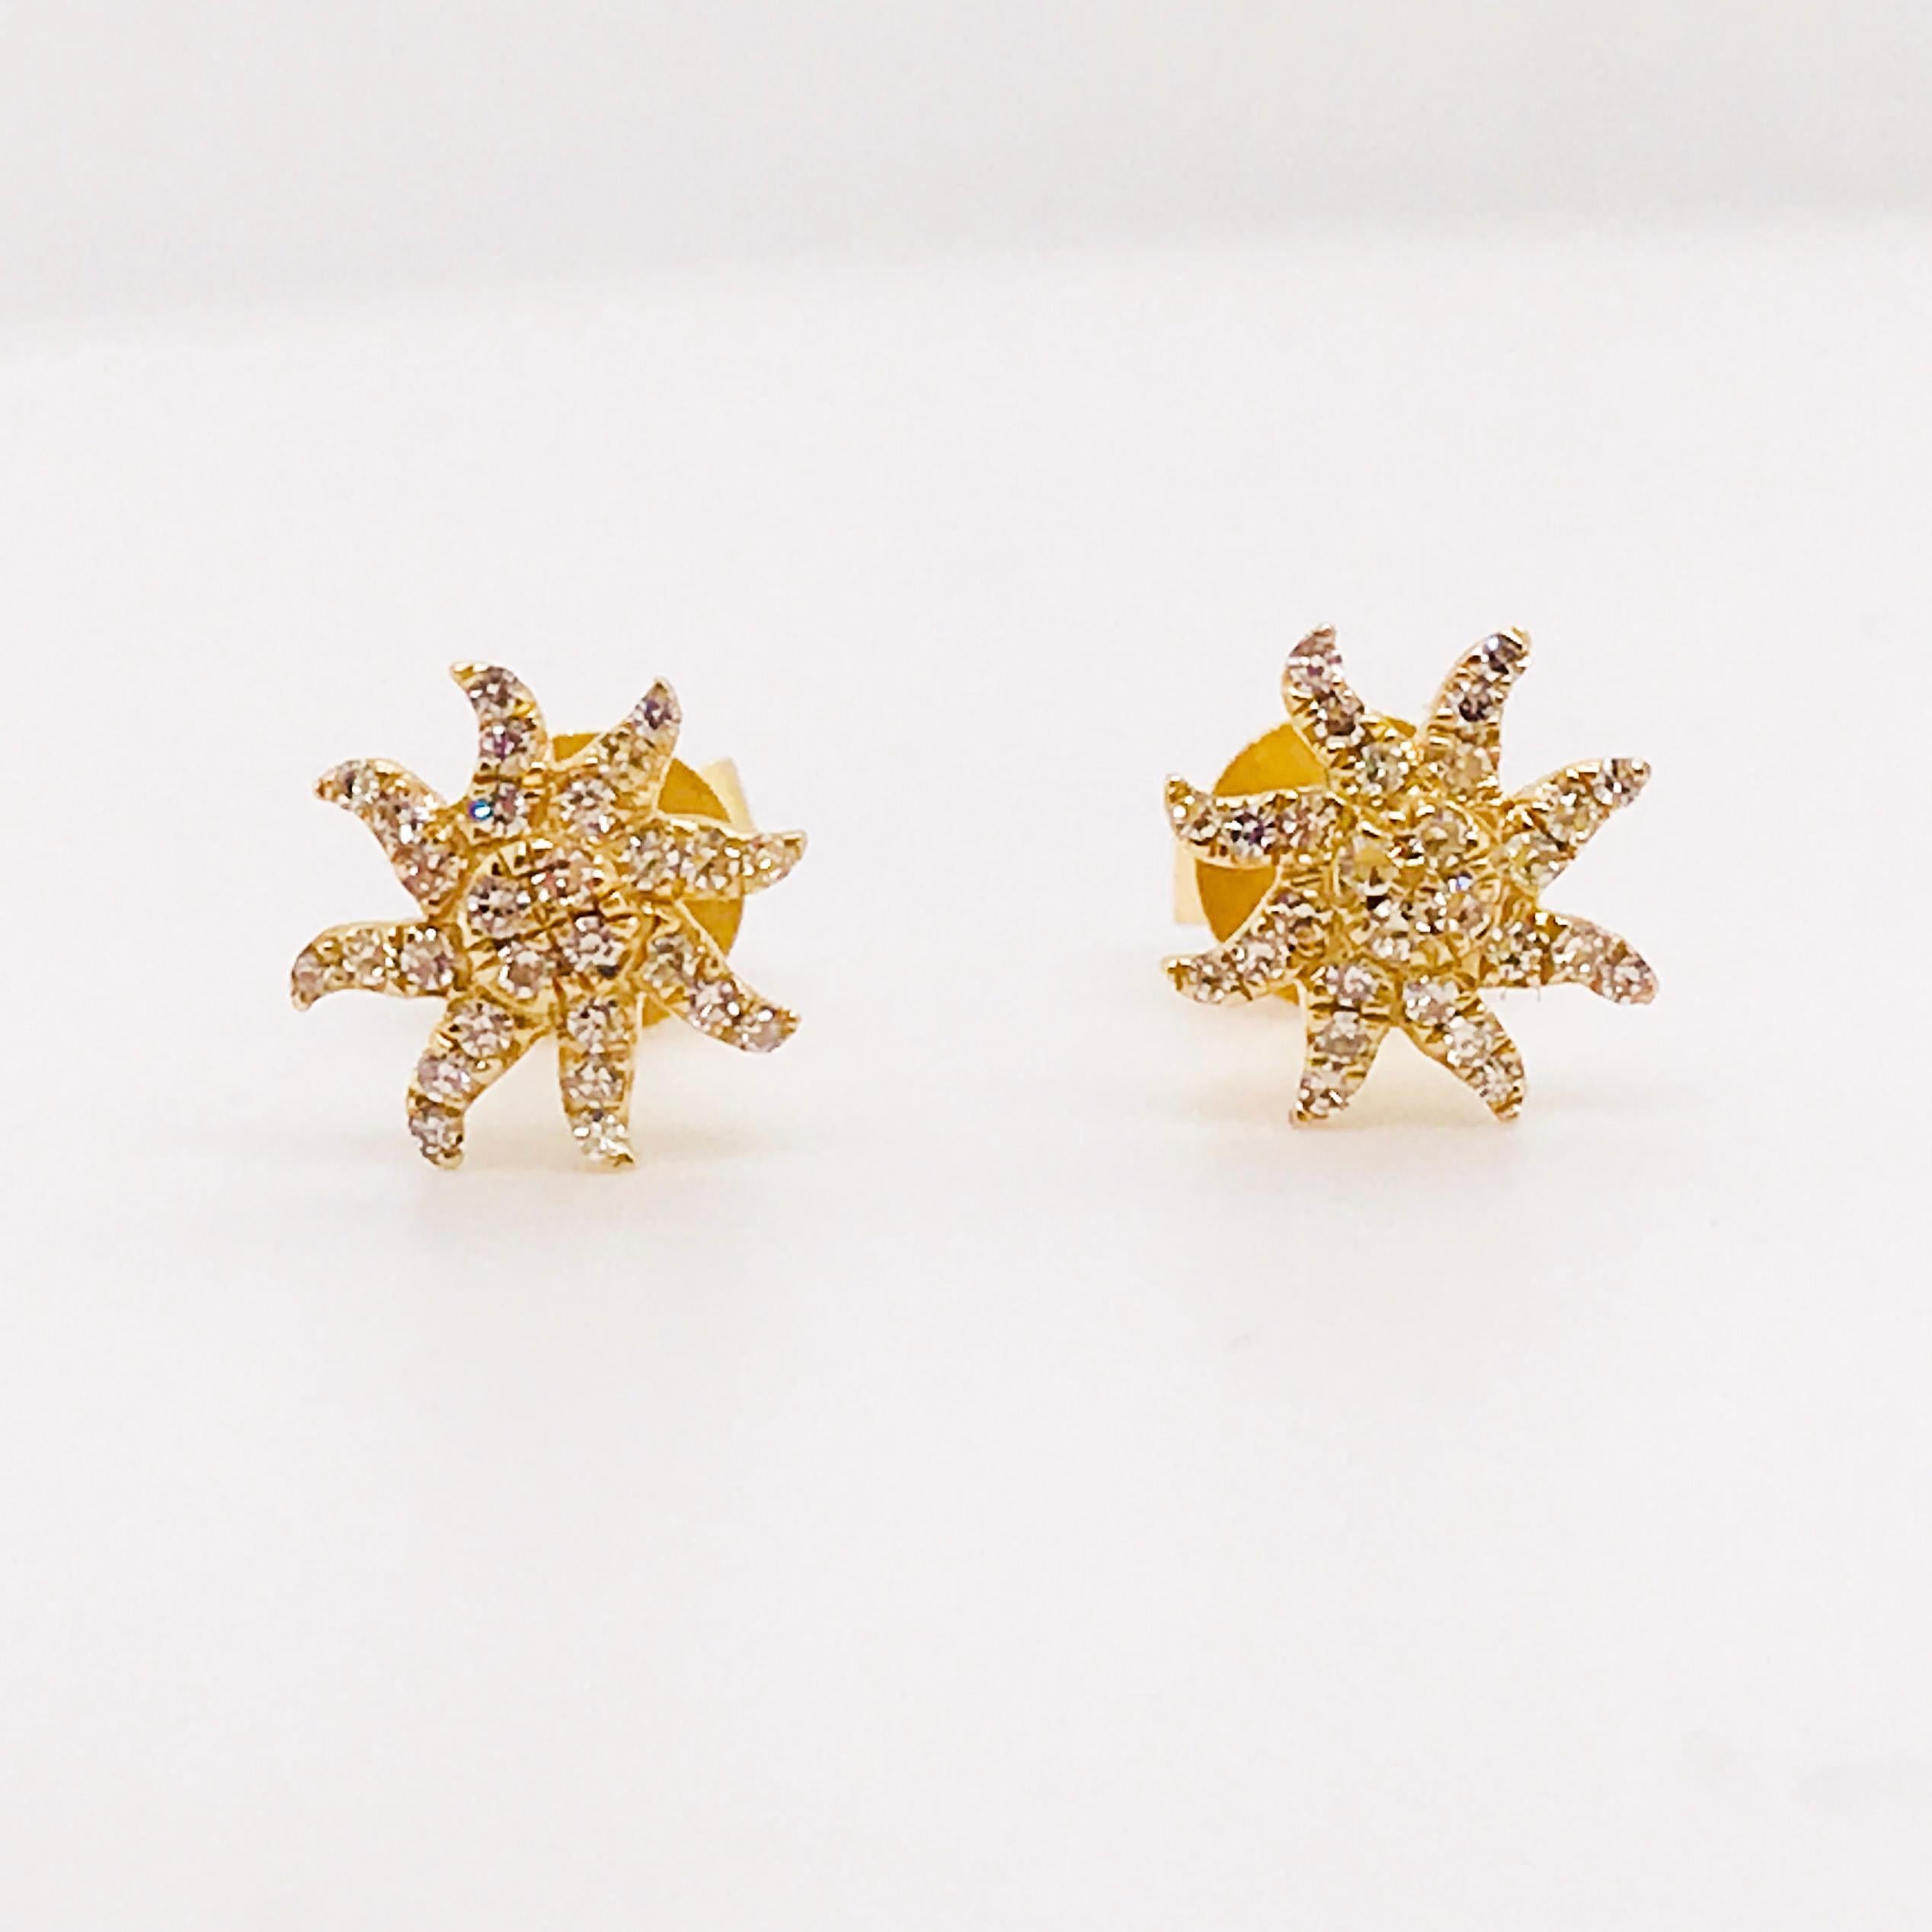 Round Cut Diamond Starburst Earring Studs in 14 Karat Gold, Diamond Sun Earring Studs